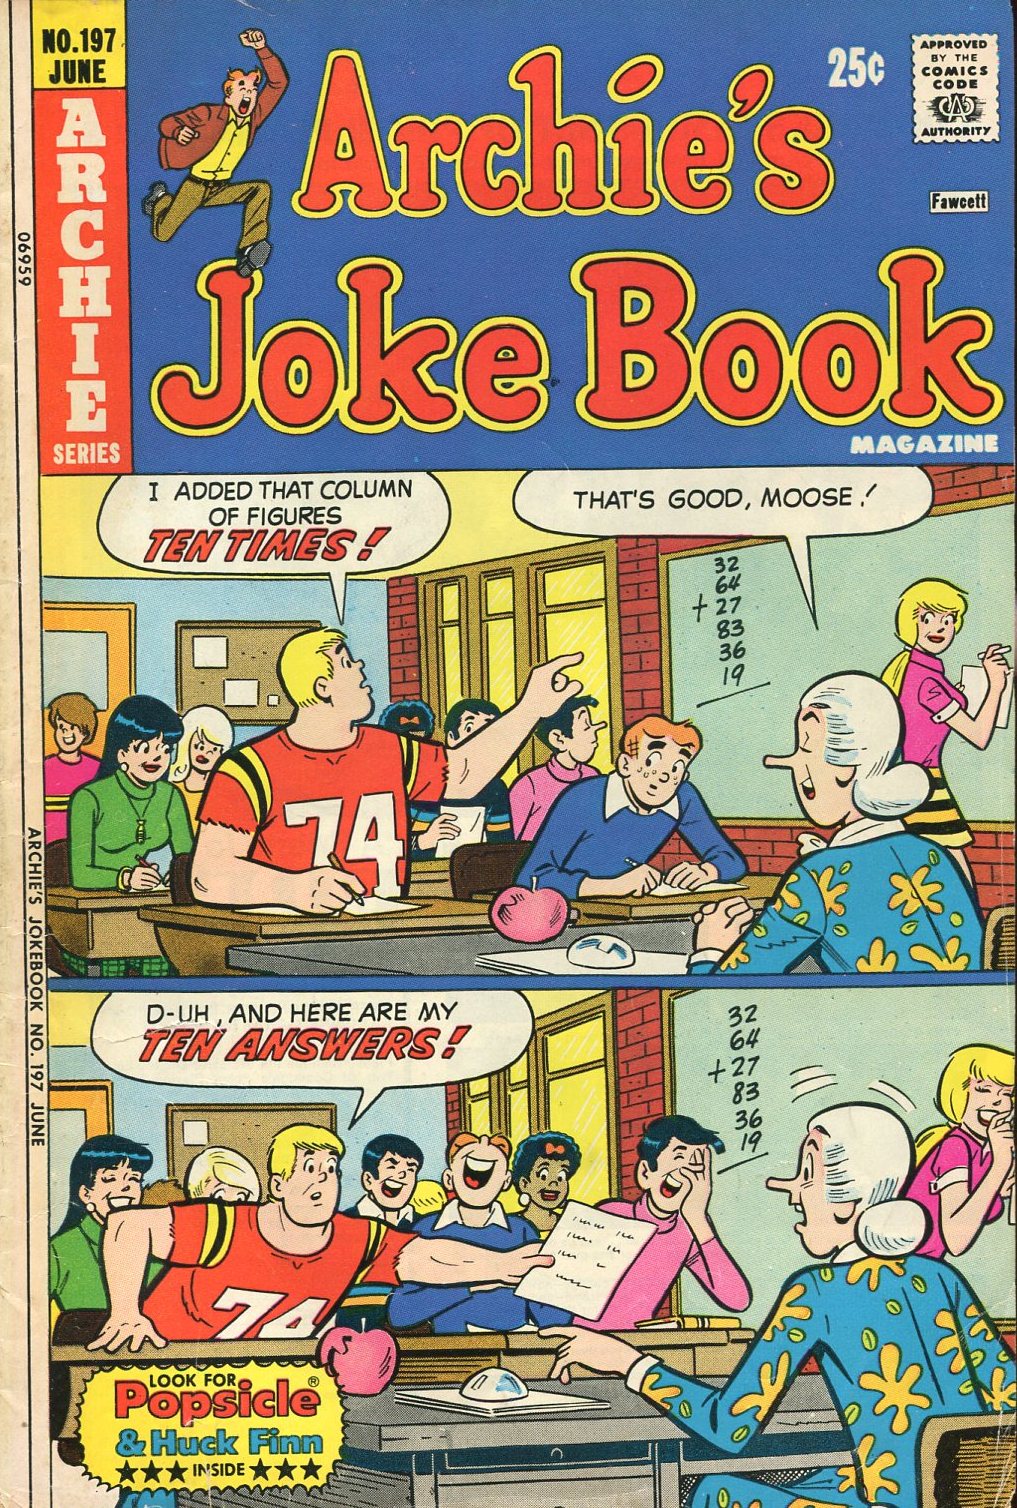 Archie's Joke Book Magazine 197 Page 1